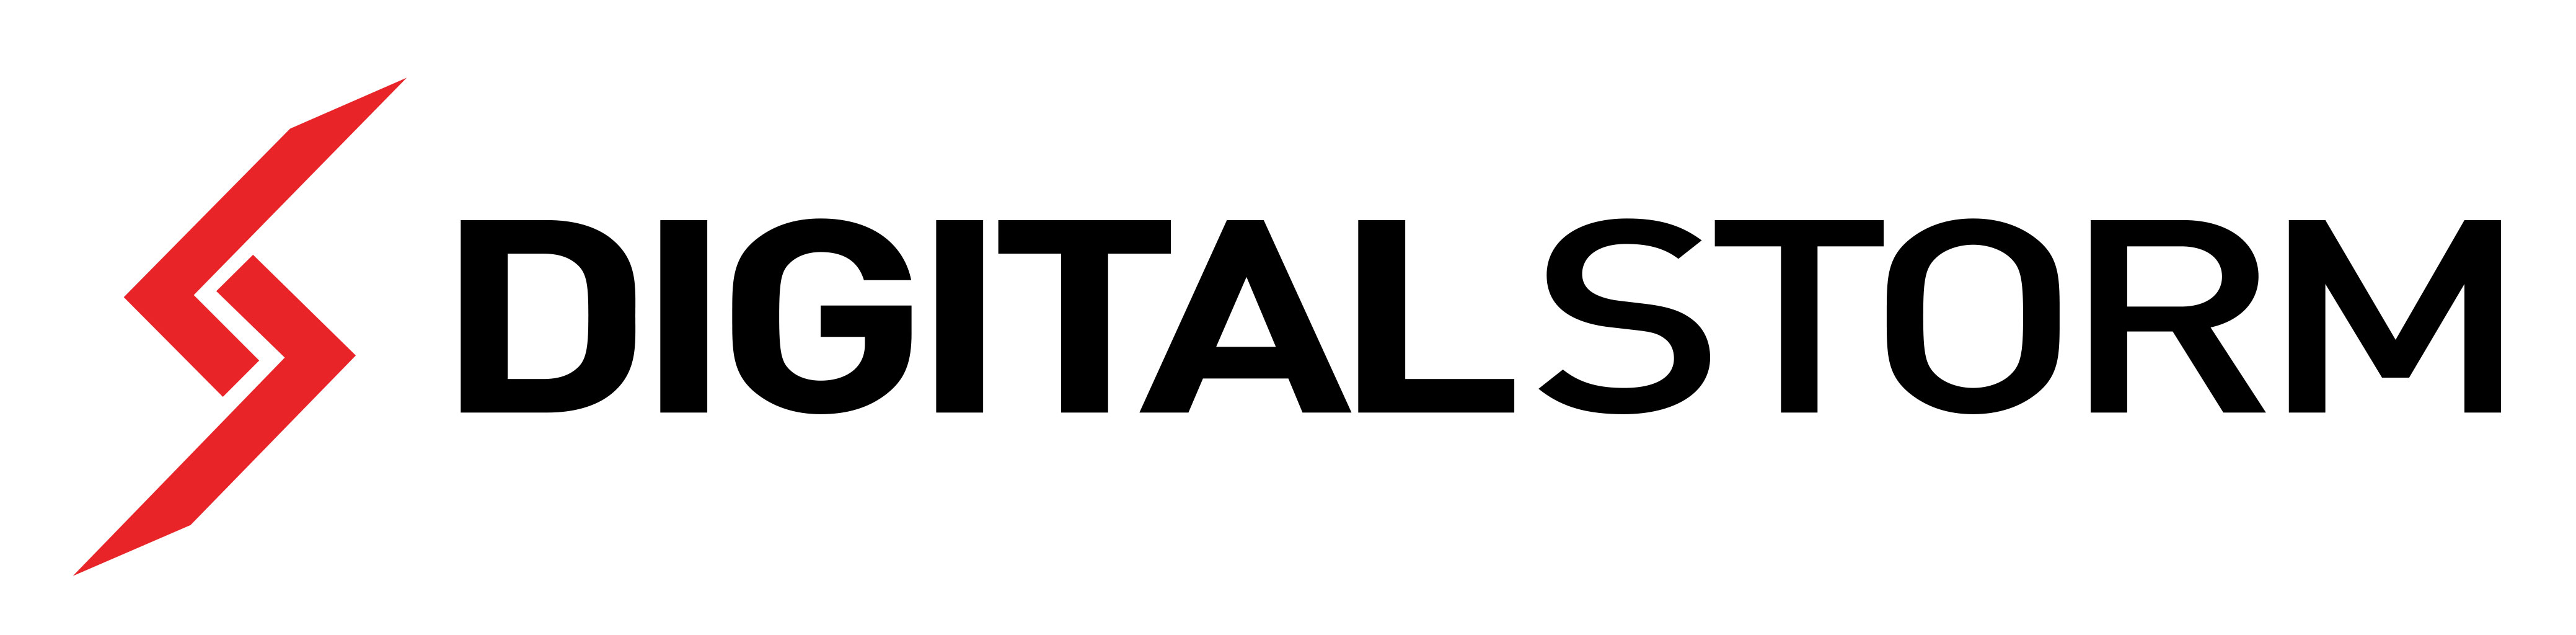 Digital Storm Online Logo photo - 1